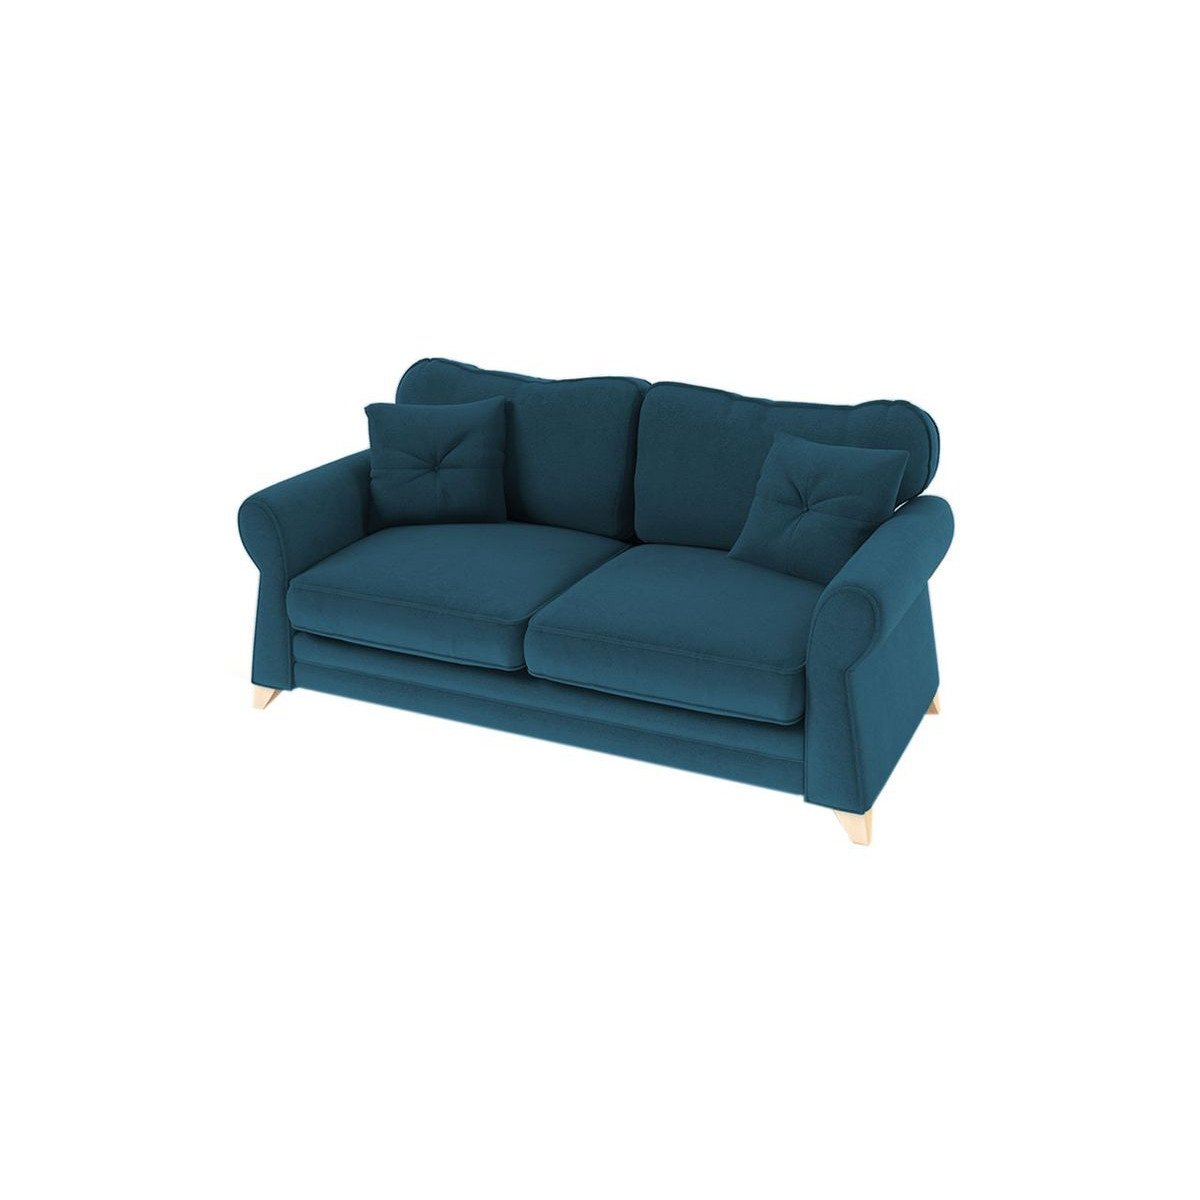 Lear 3 Seater Sofa, navy blue